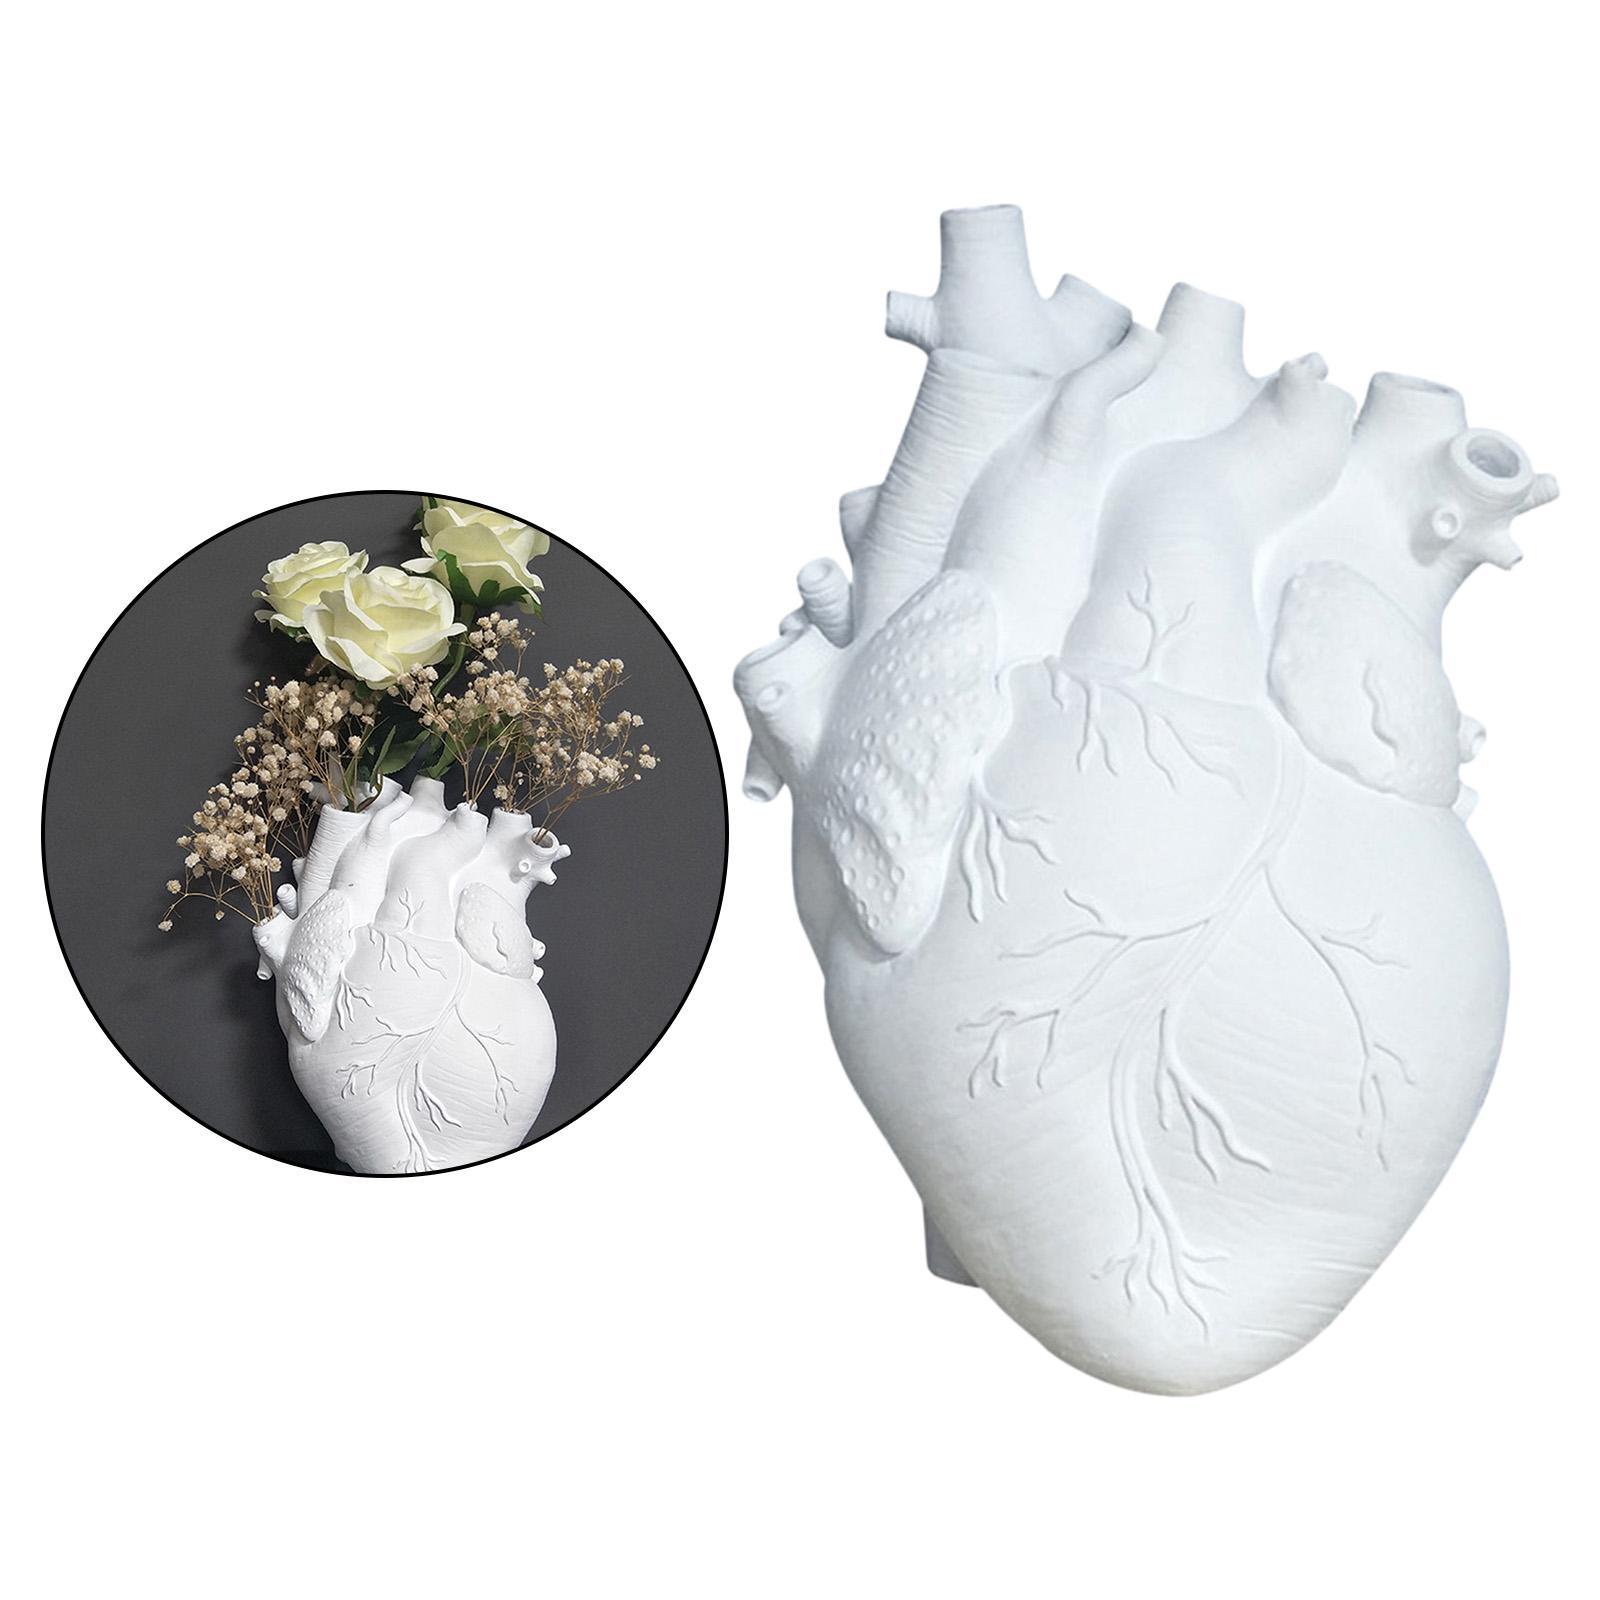 Anatomical Heart Vase Resin Flower Pot Desktop Ornament Home Cabinet White